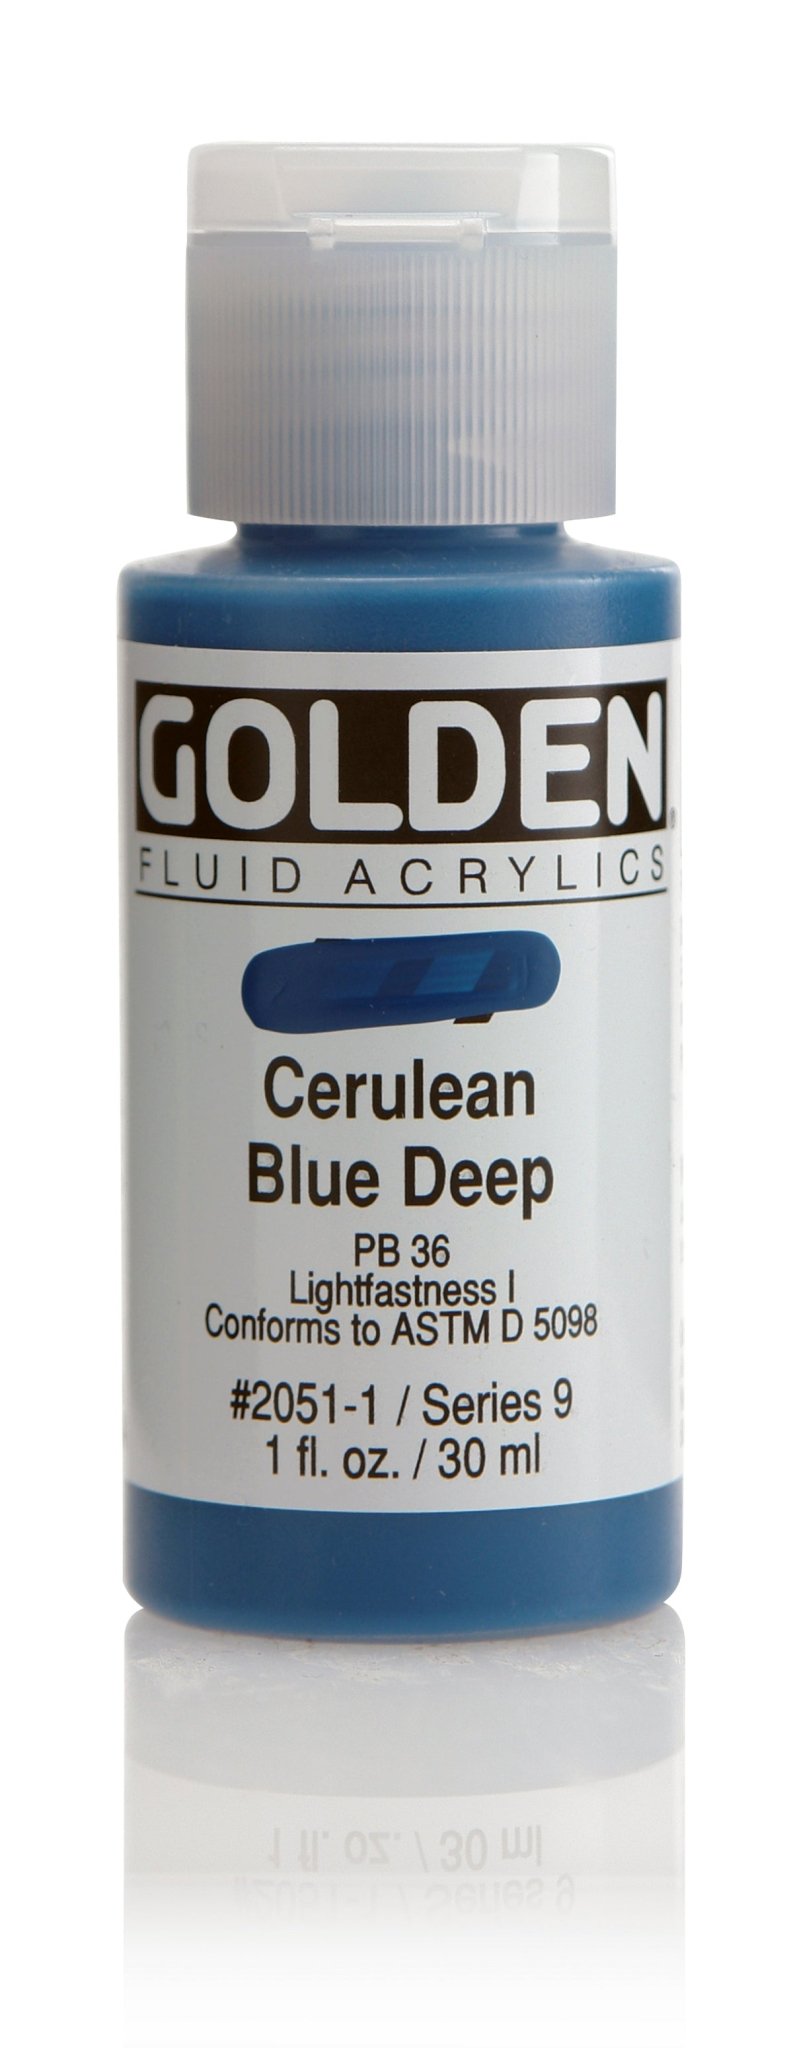 Golden Fluid Acrylic 30ml Cerulean Blue Deep - theartshop.com.au